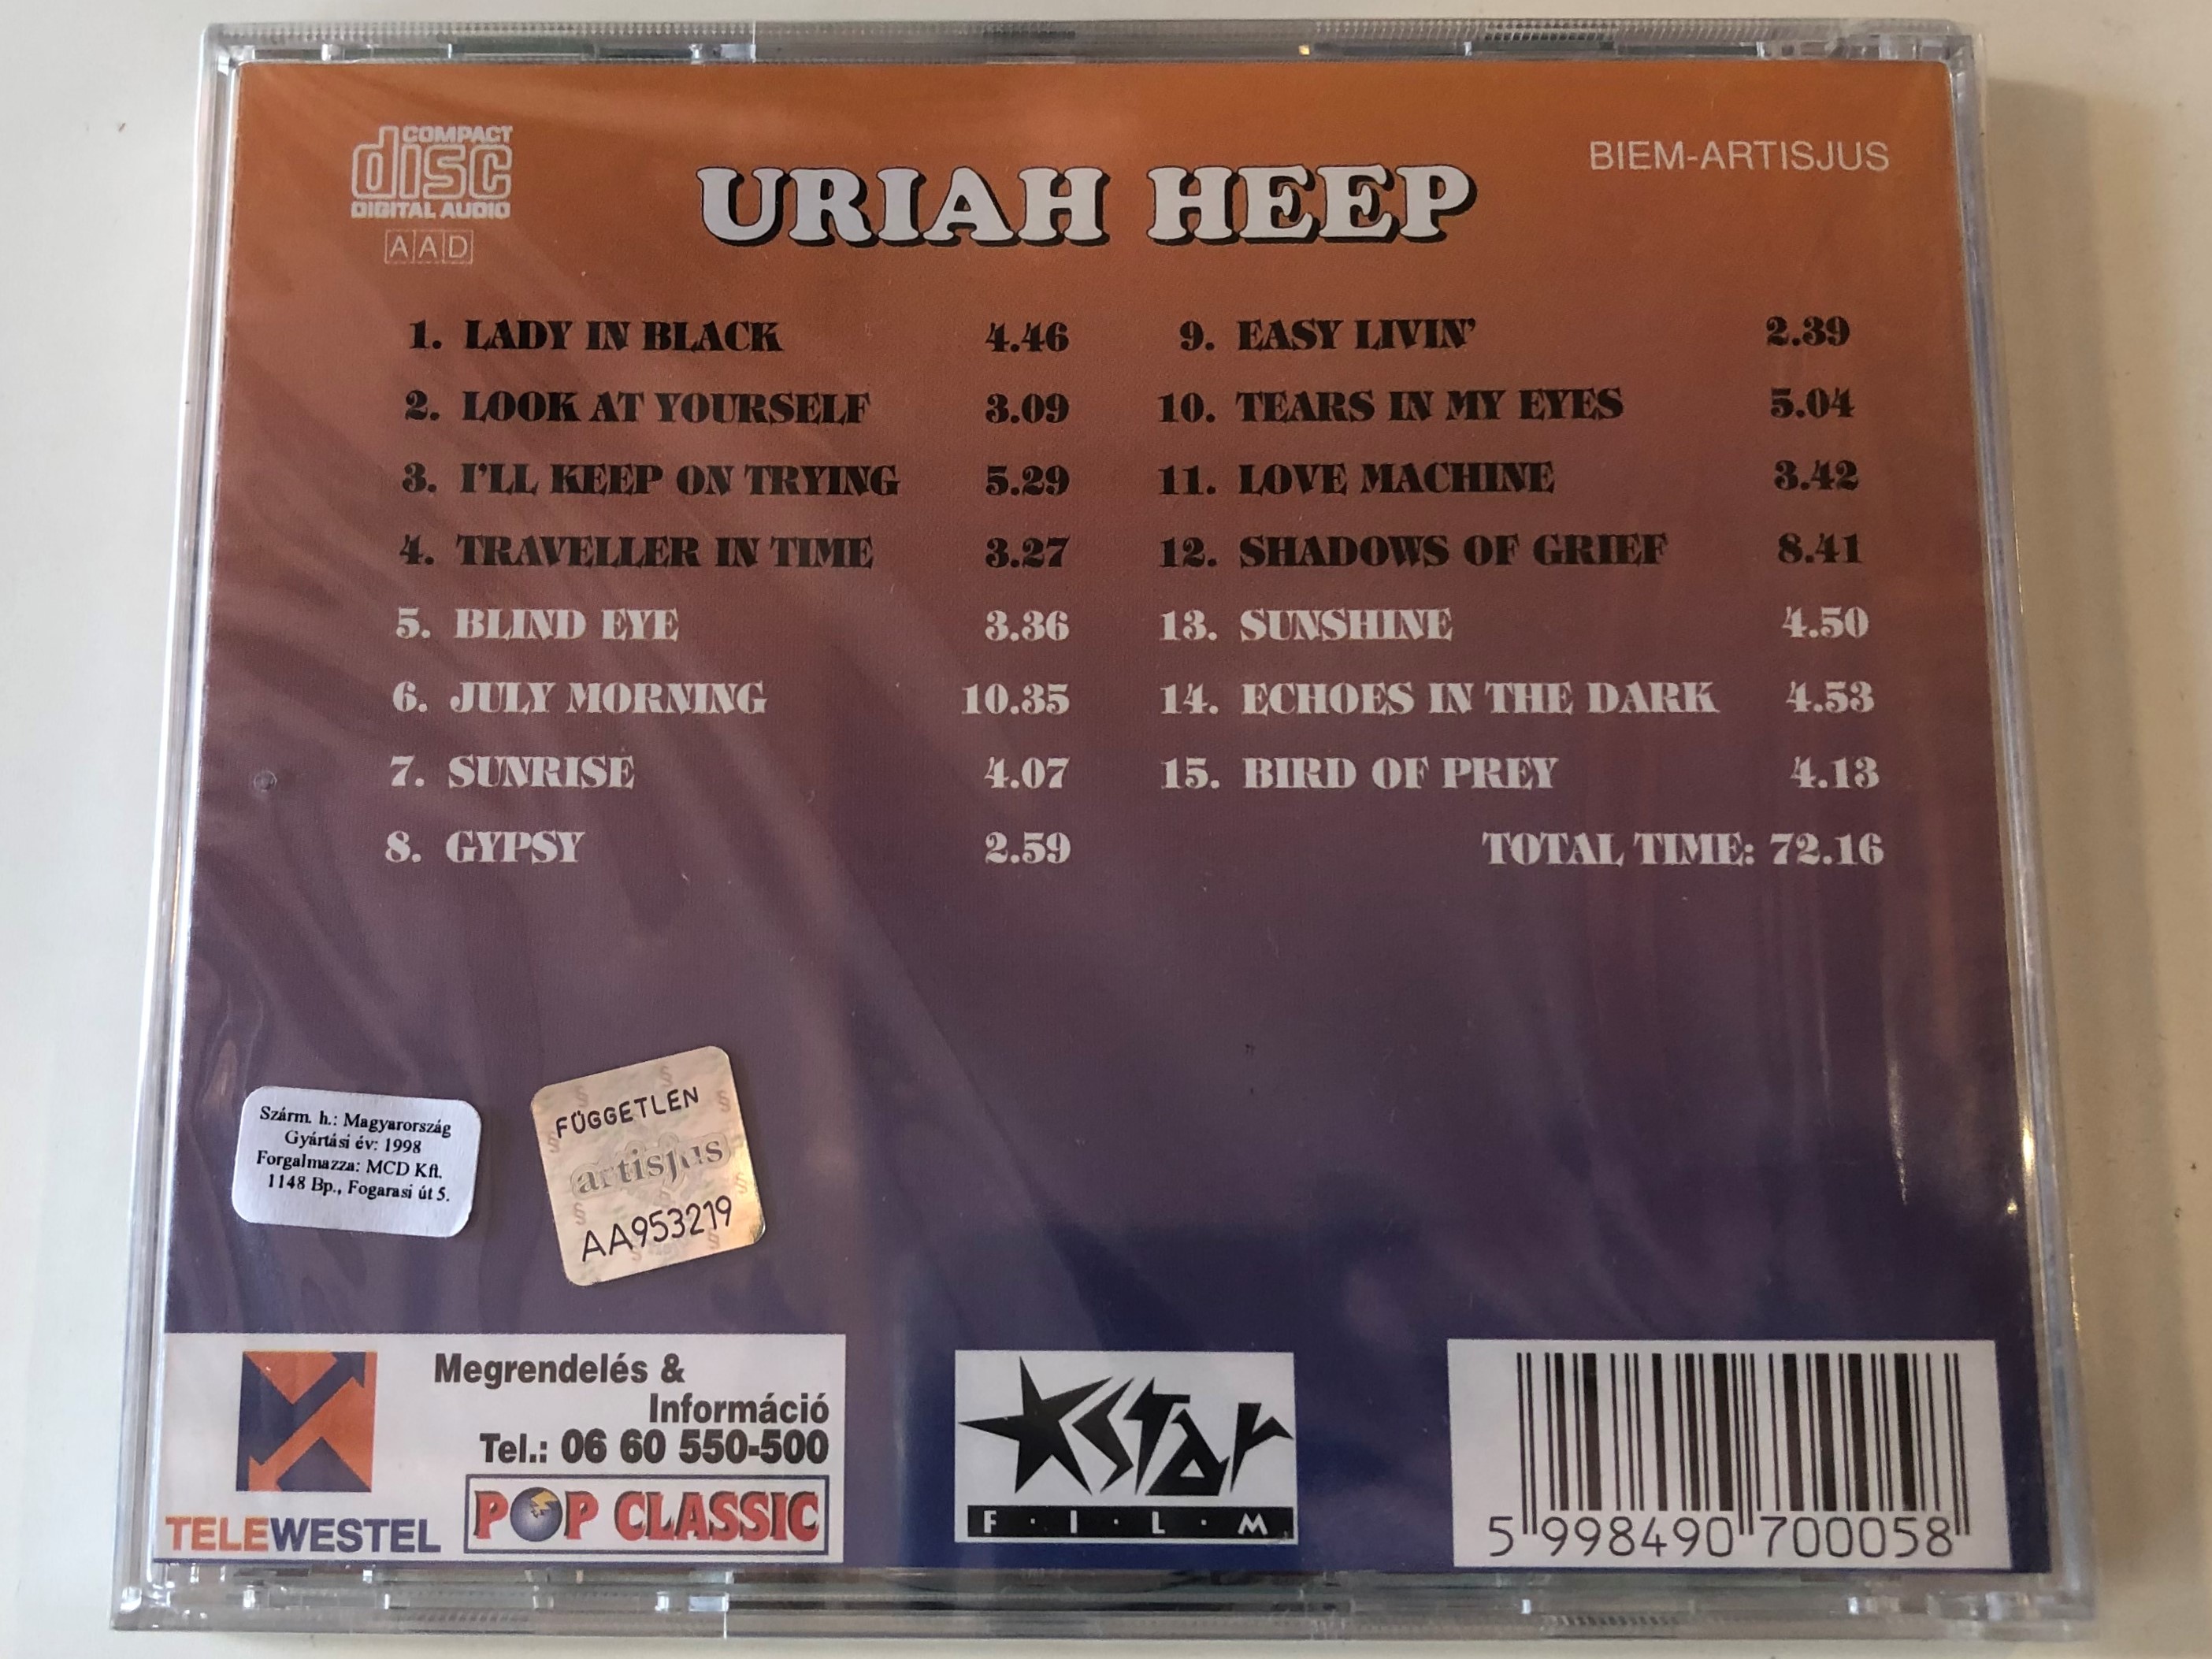 uriah-heep-best-of-total-time-7216-pop-classic-audio-cd-5998490700058-2-.jpg